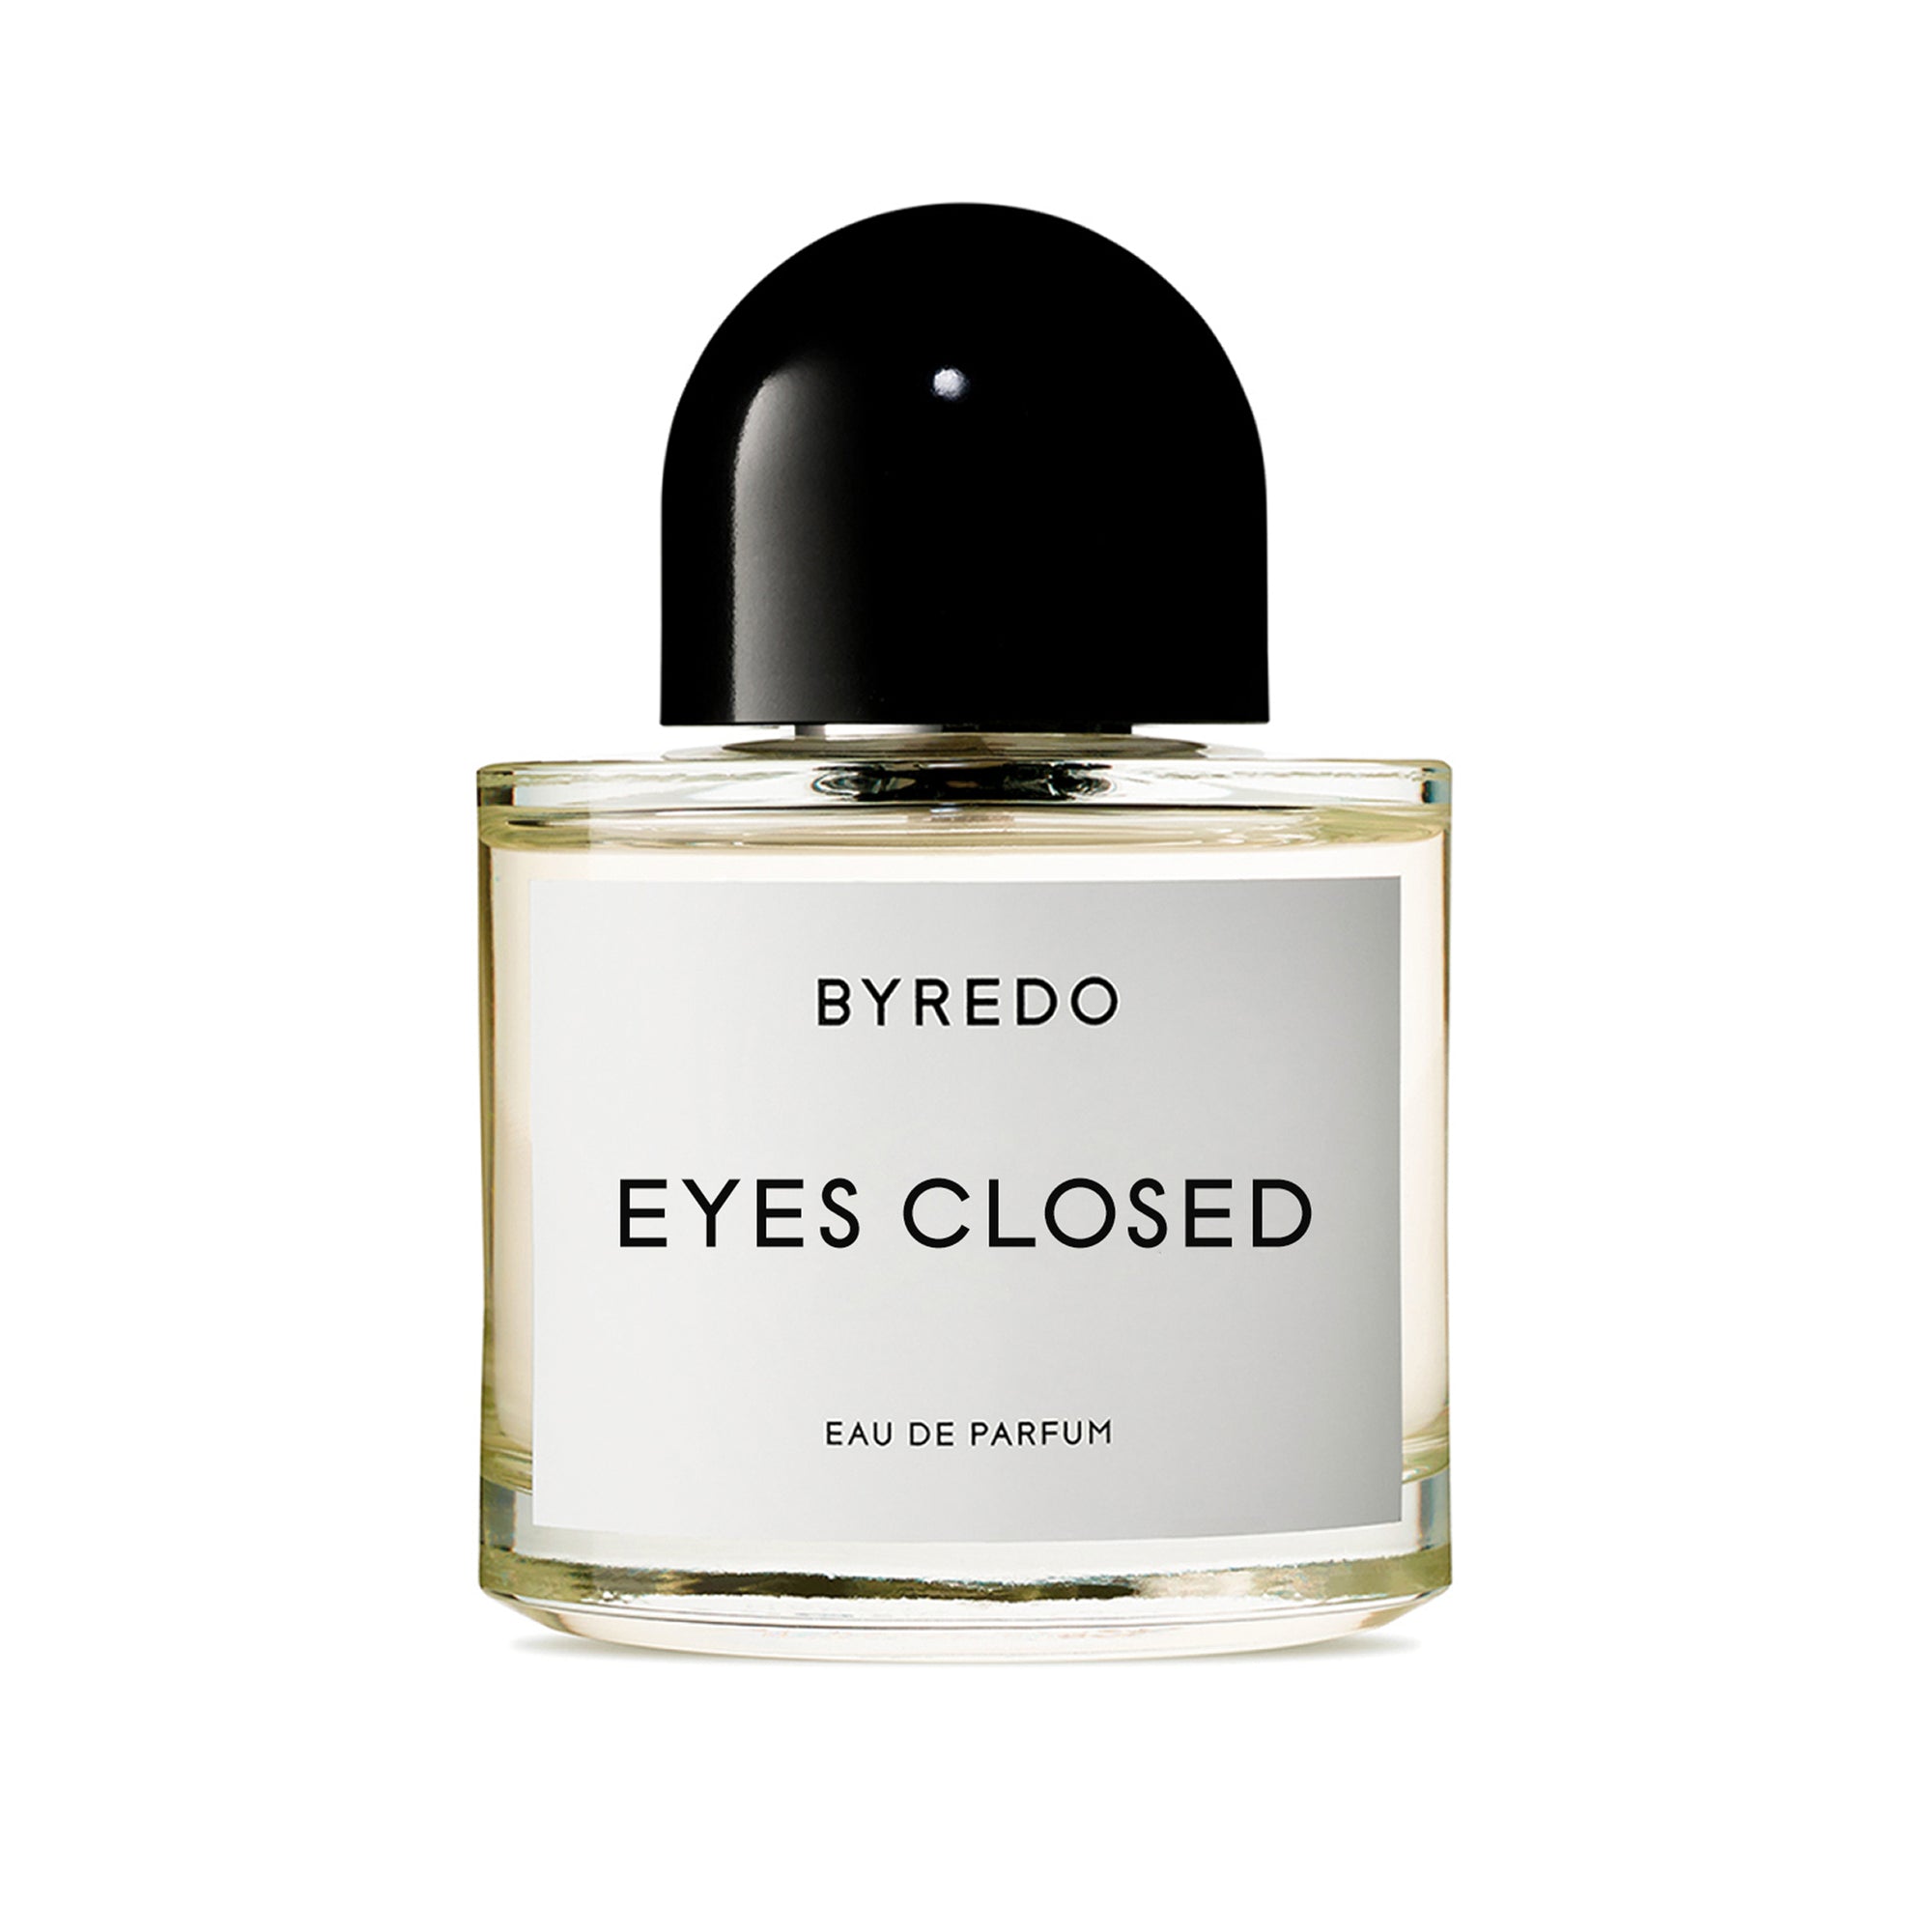 BYREDO - Eau de Parfum Eyes Closed - (100Ml) view 1